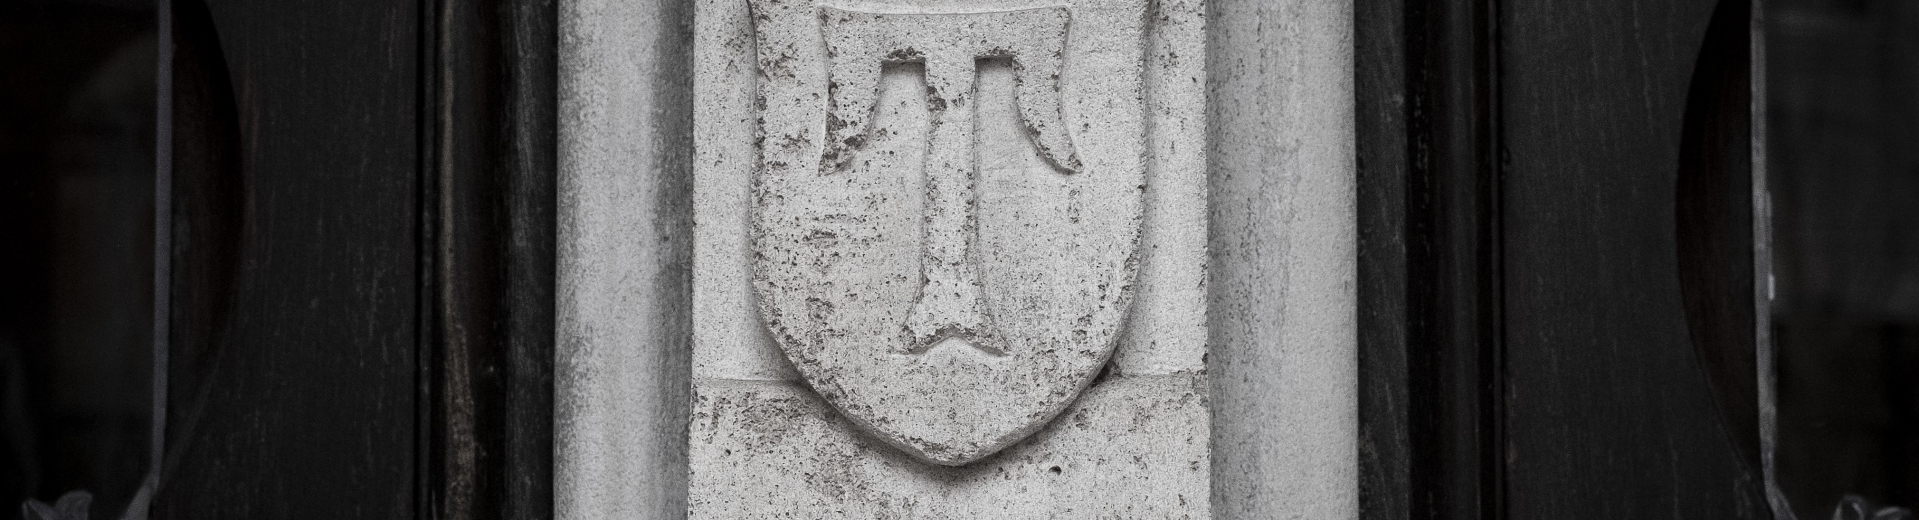 Historic Temple "T" on a stone pillar at Temple University.